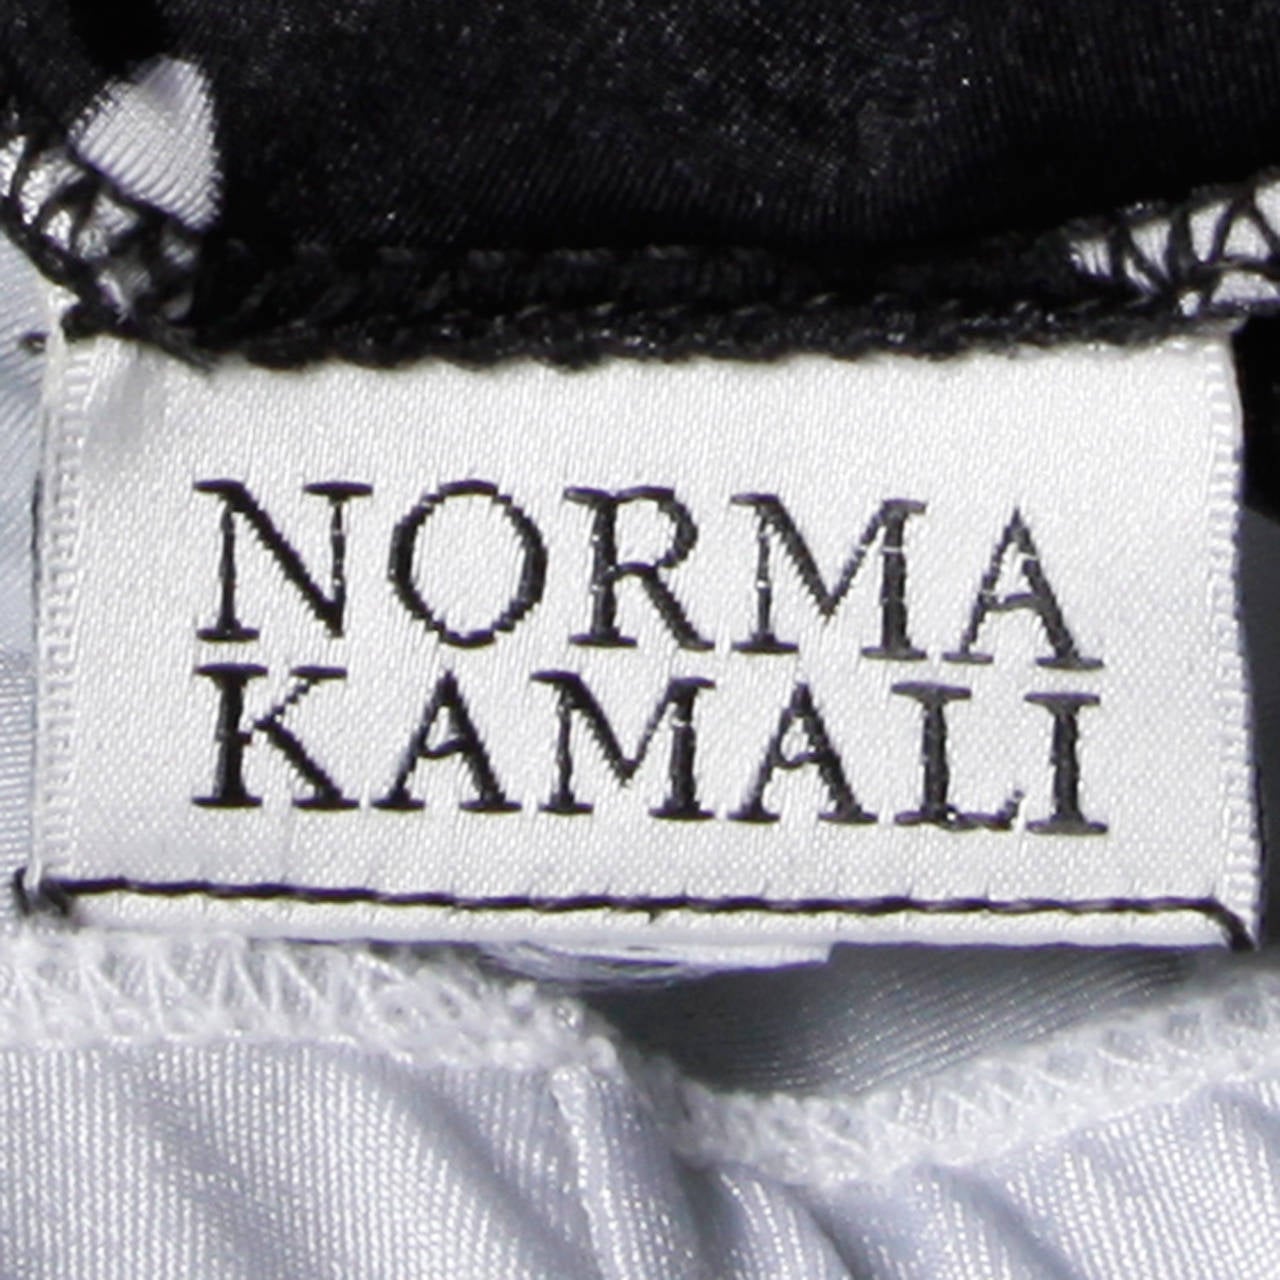 OMO Norma Kamali - Crop top vu dans le film « Clueless », 1996 en vente 1